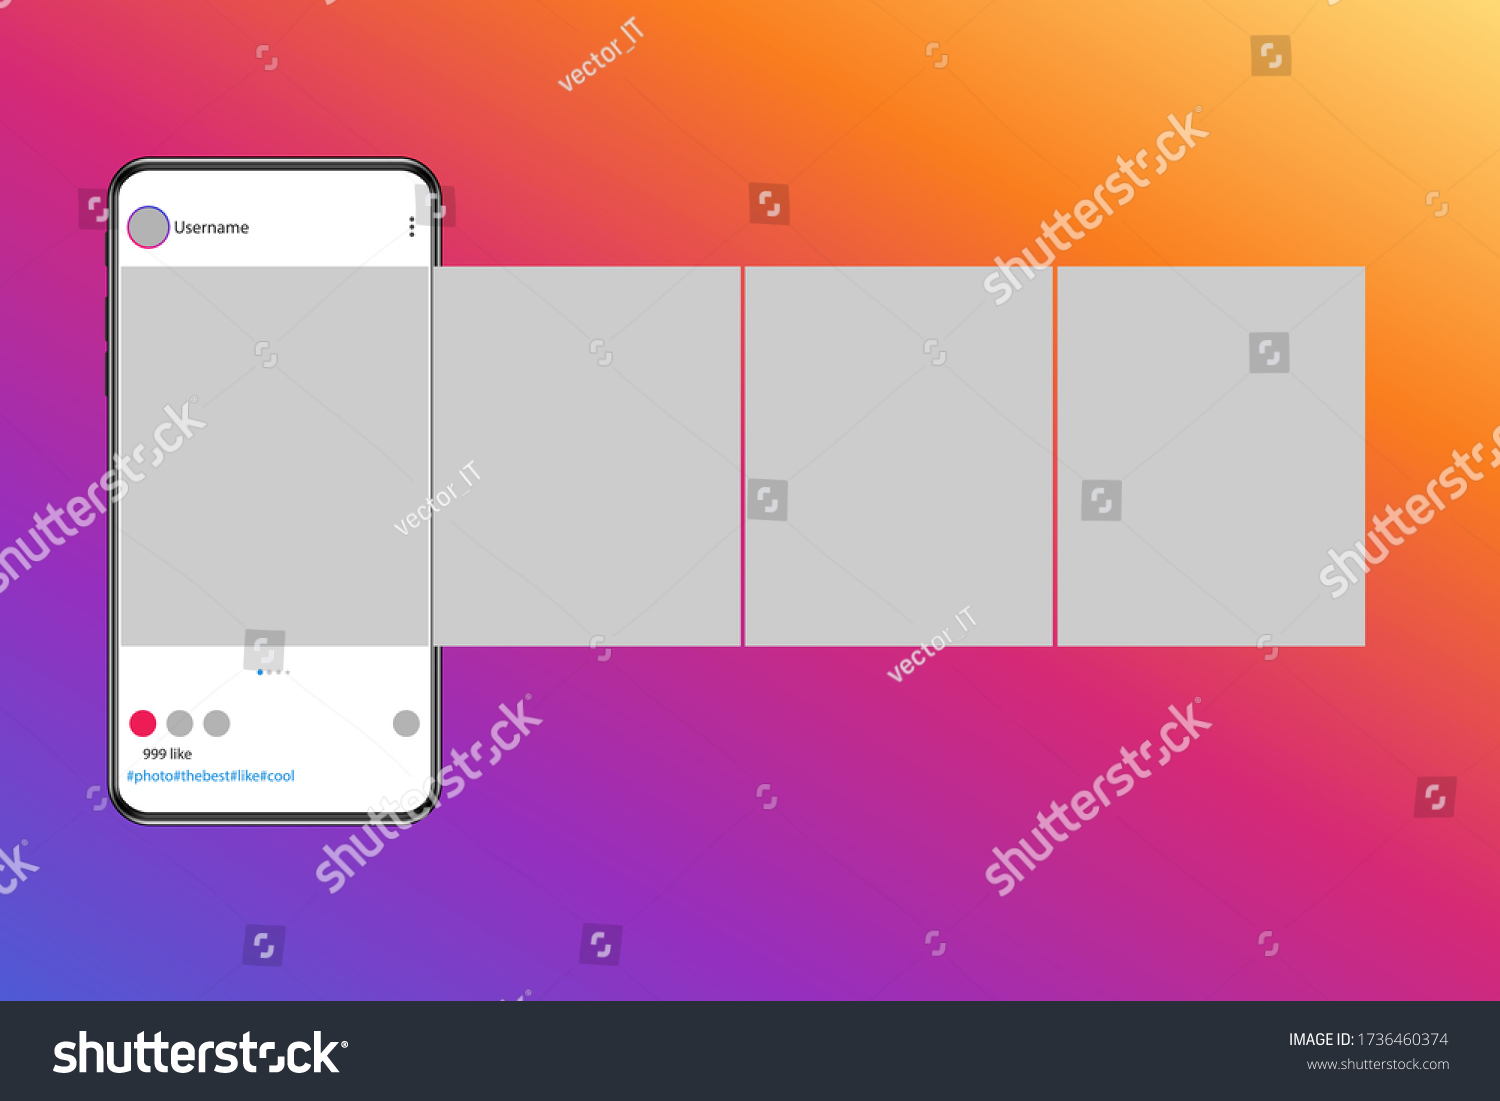 Carousel post on social network. Photo frame. Interface in popular social networks. Vector illustration.  #1736460374